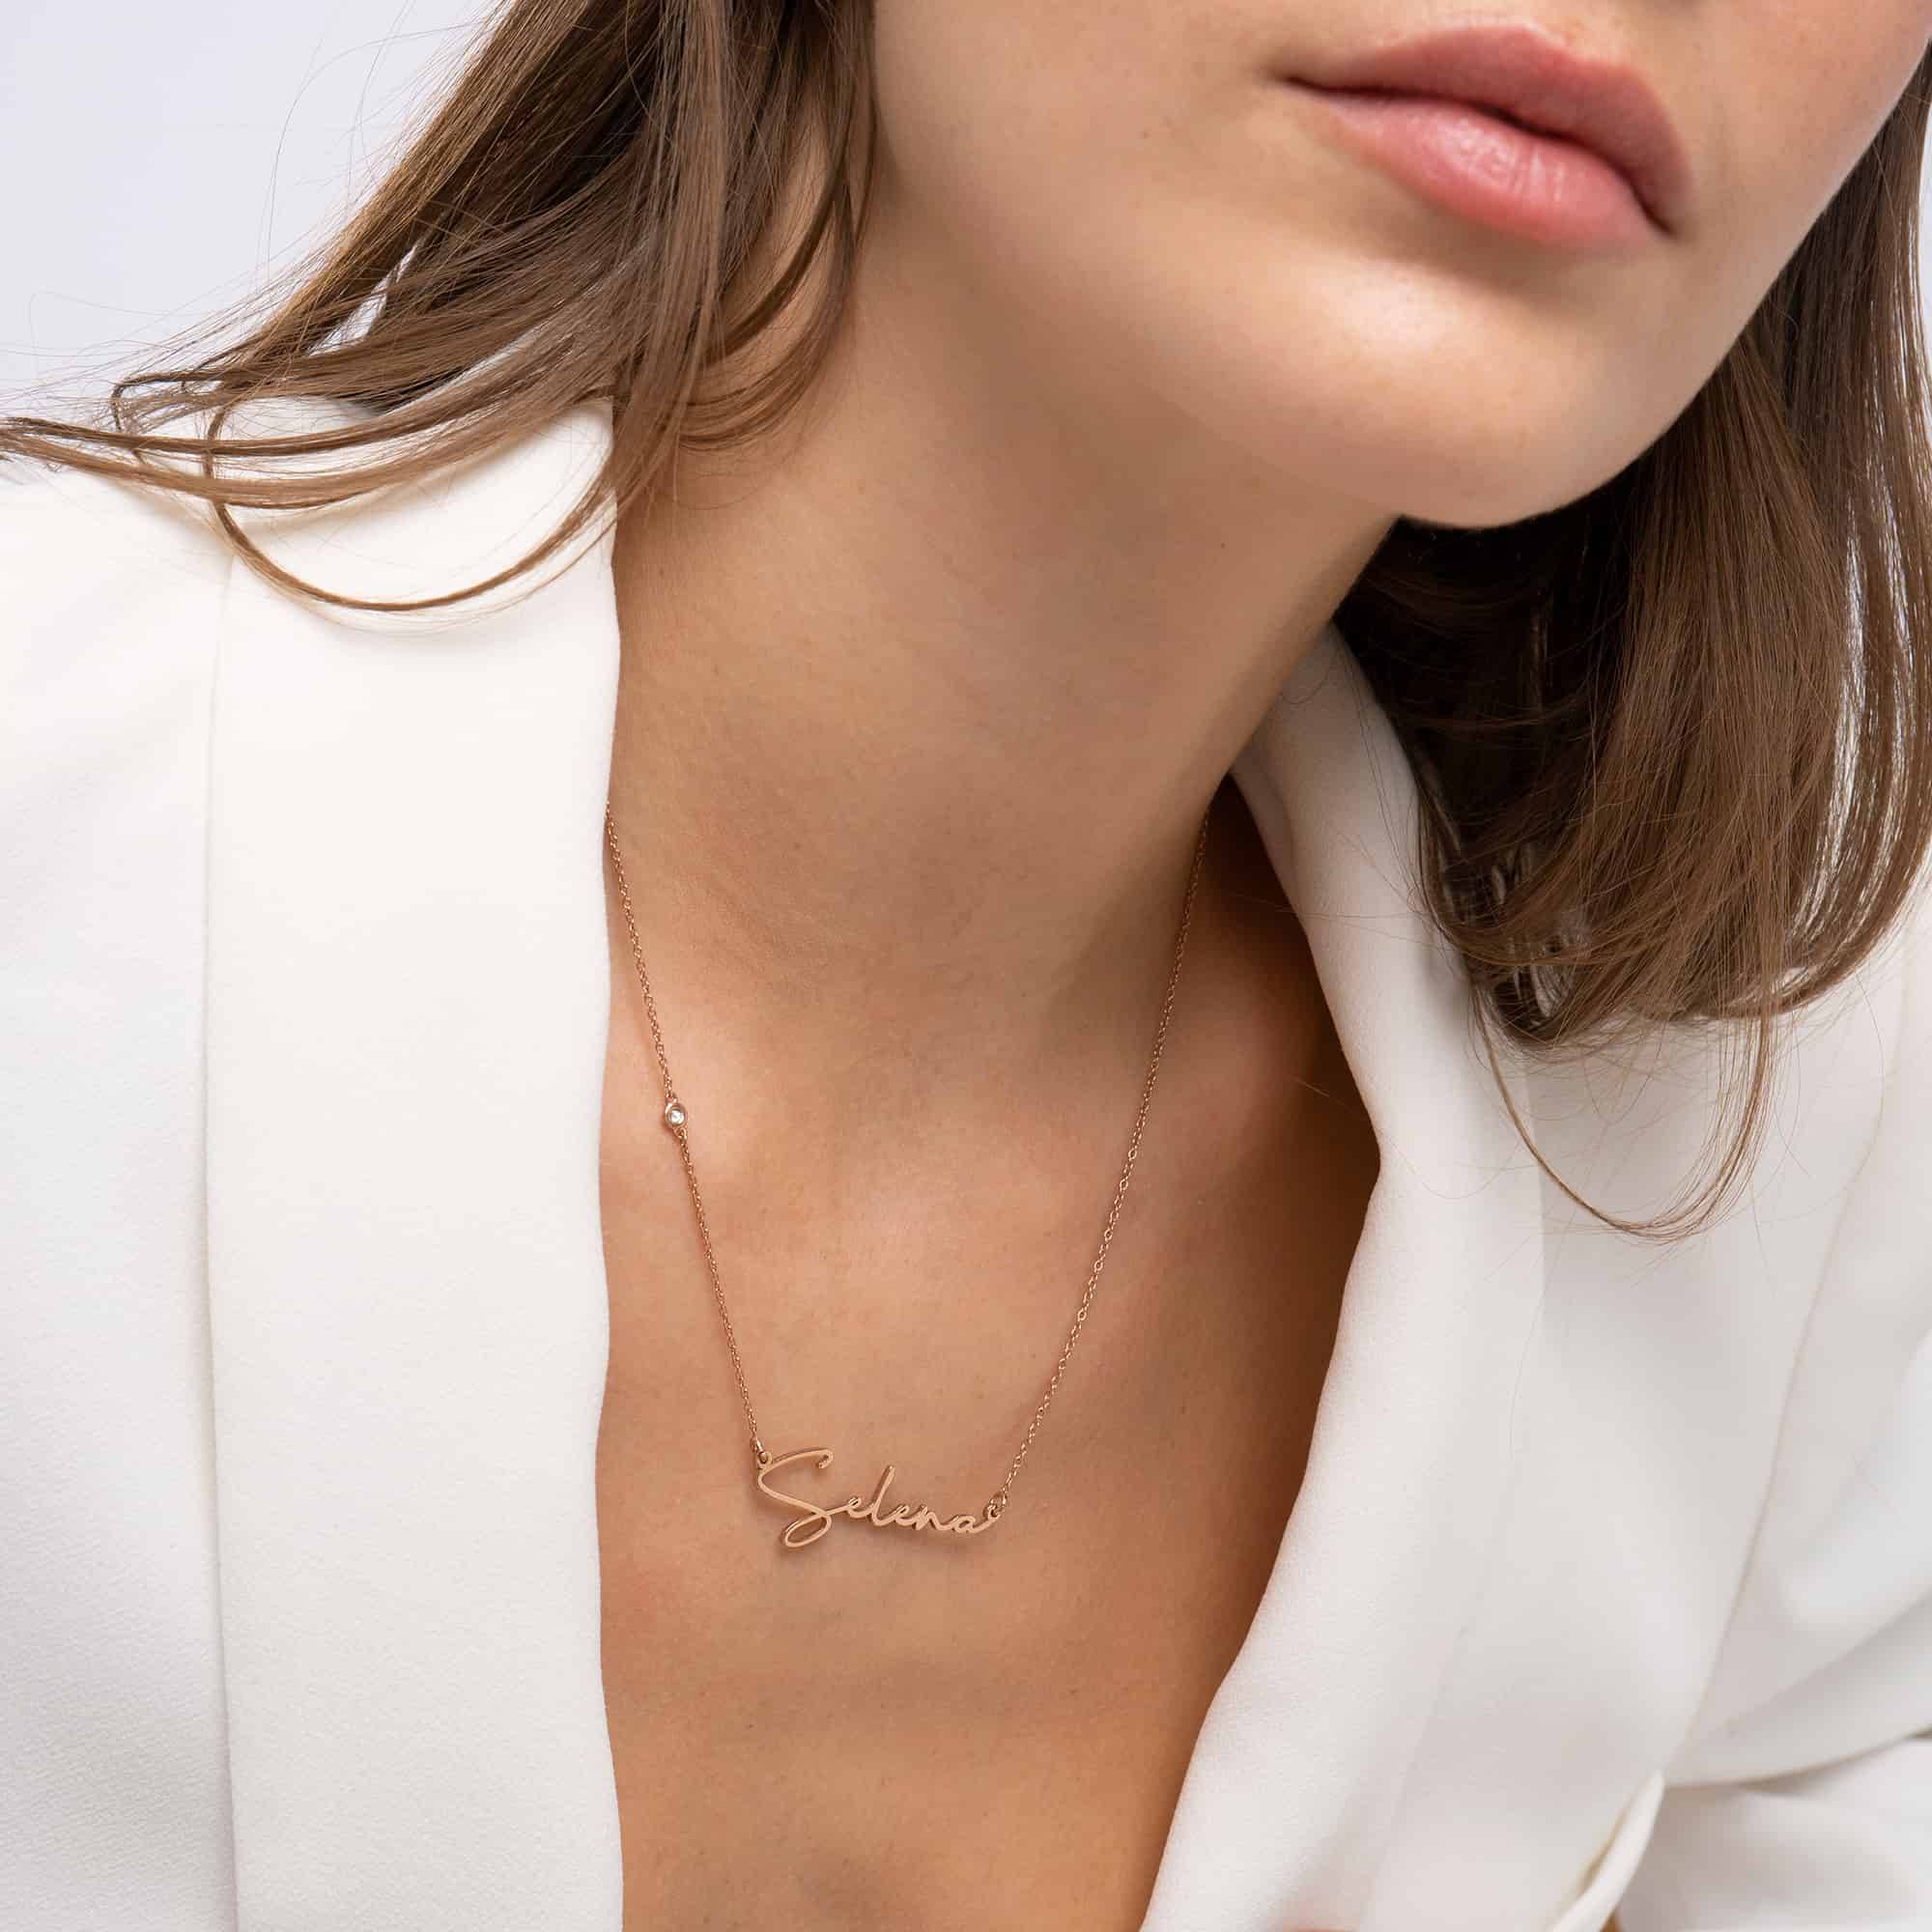 Paris Name Necklace with Diamonds - Rose Gold Vermeil-2 product photo